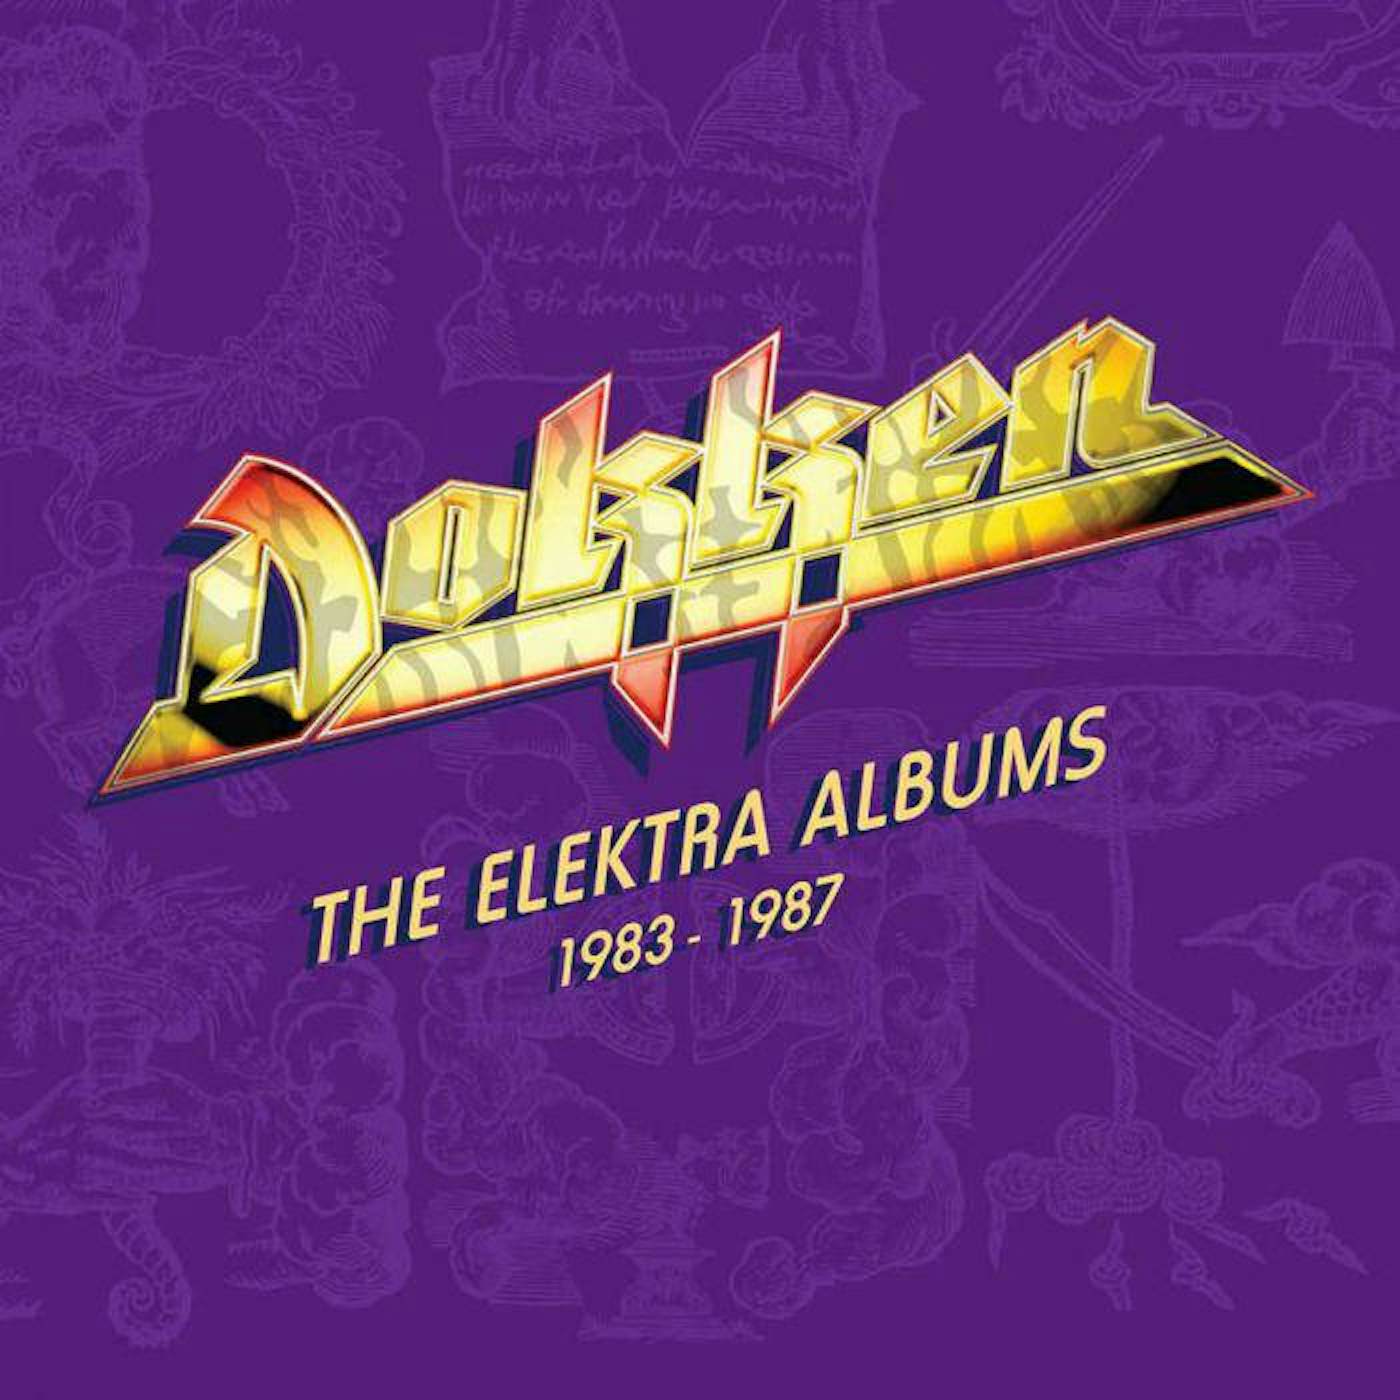 Dokken Elektra Albums 1983-1987 (Box set) Vinyl Record